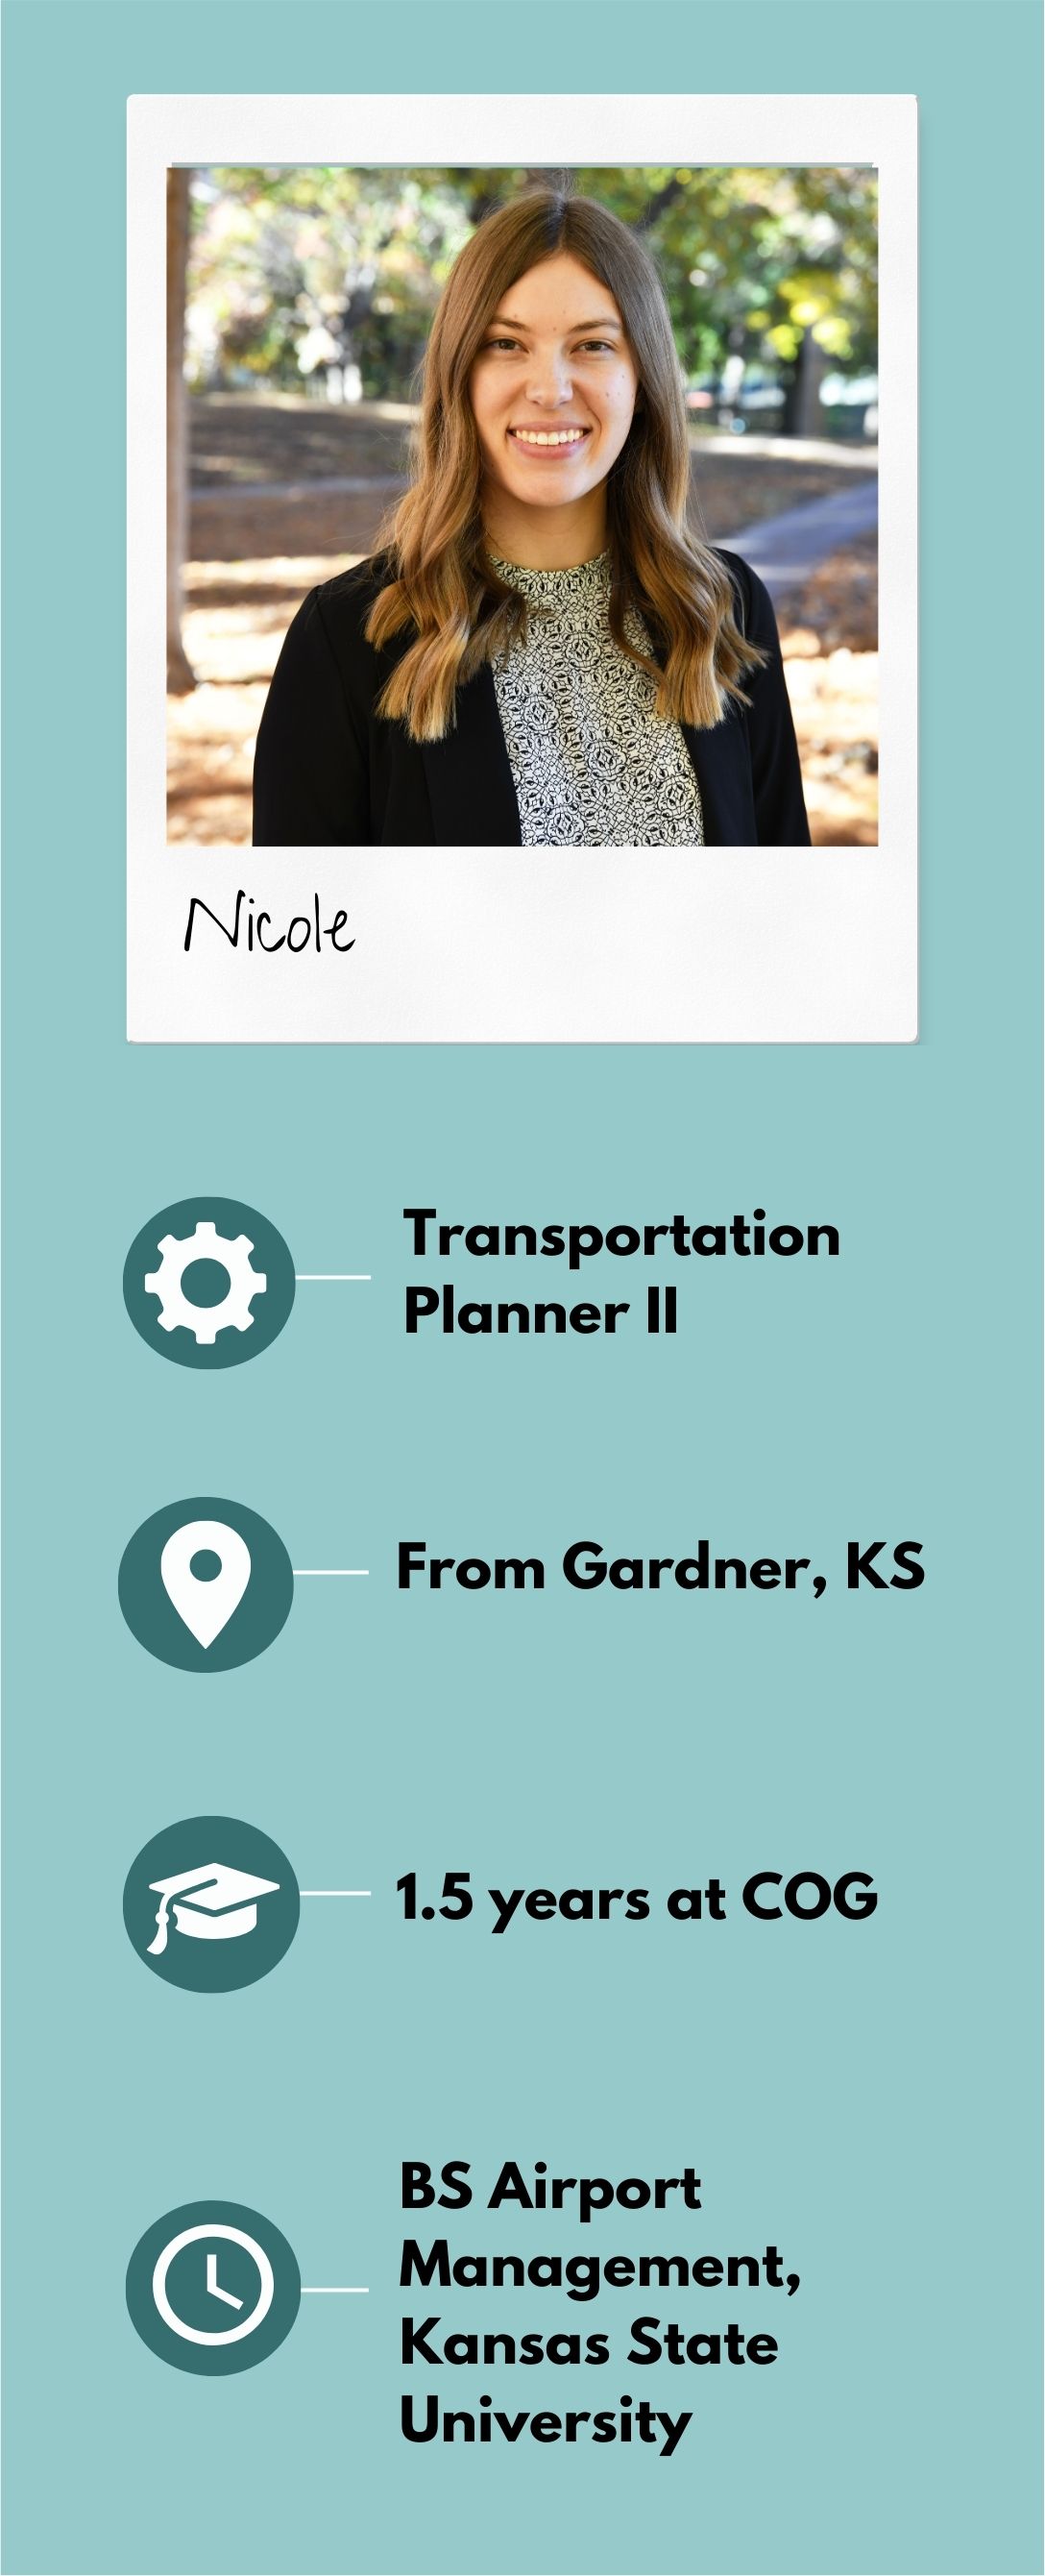 Photo of Nicole Johnson- Transportation Planner at NCTCOG